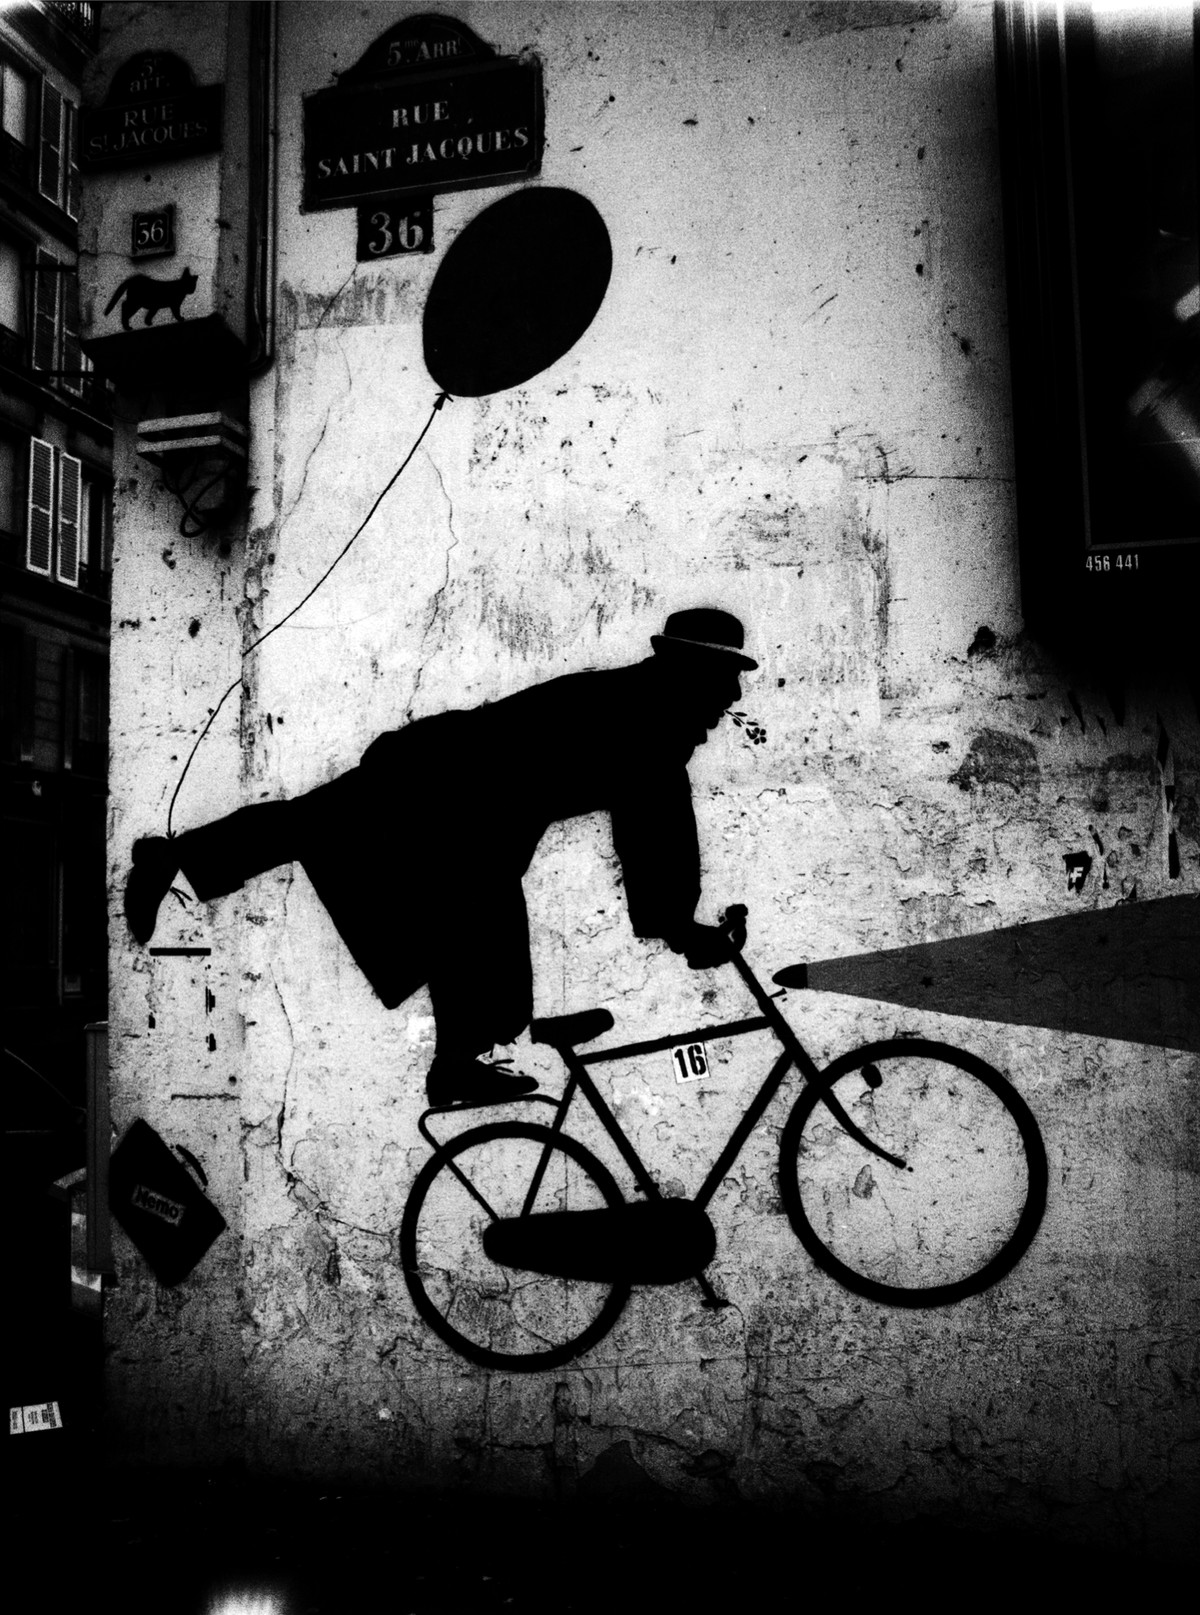 Untitled, Paris (Man on Bicycle)